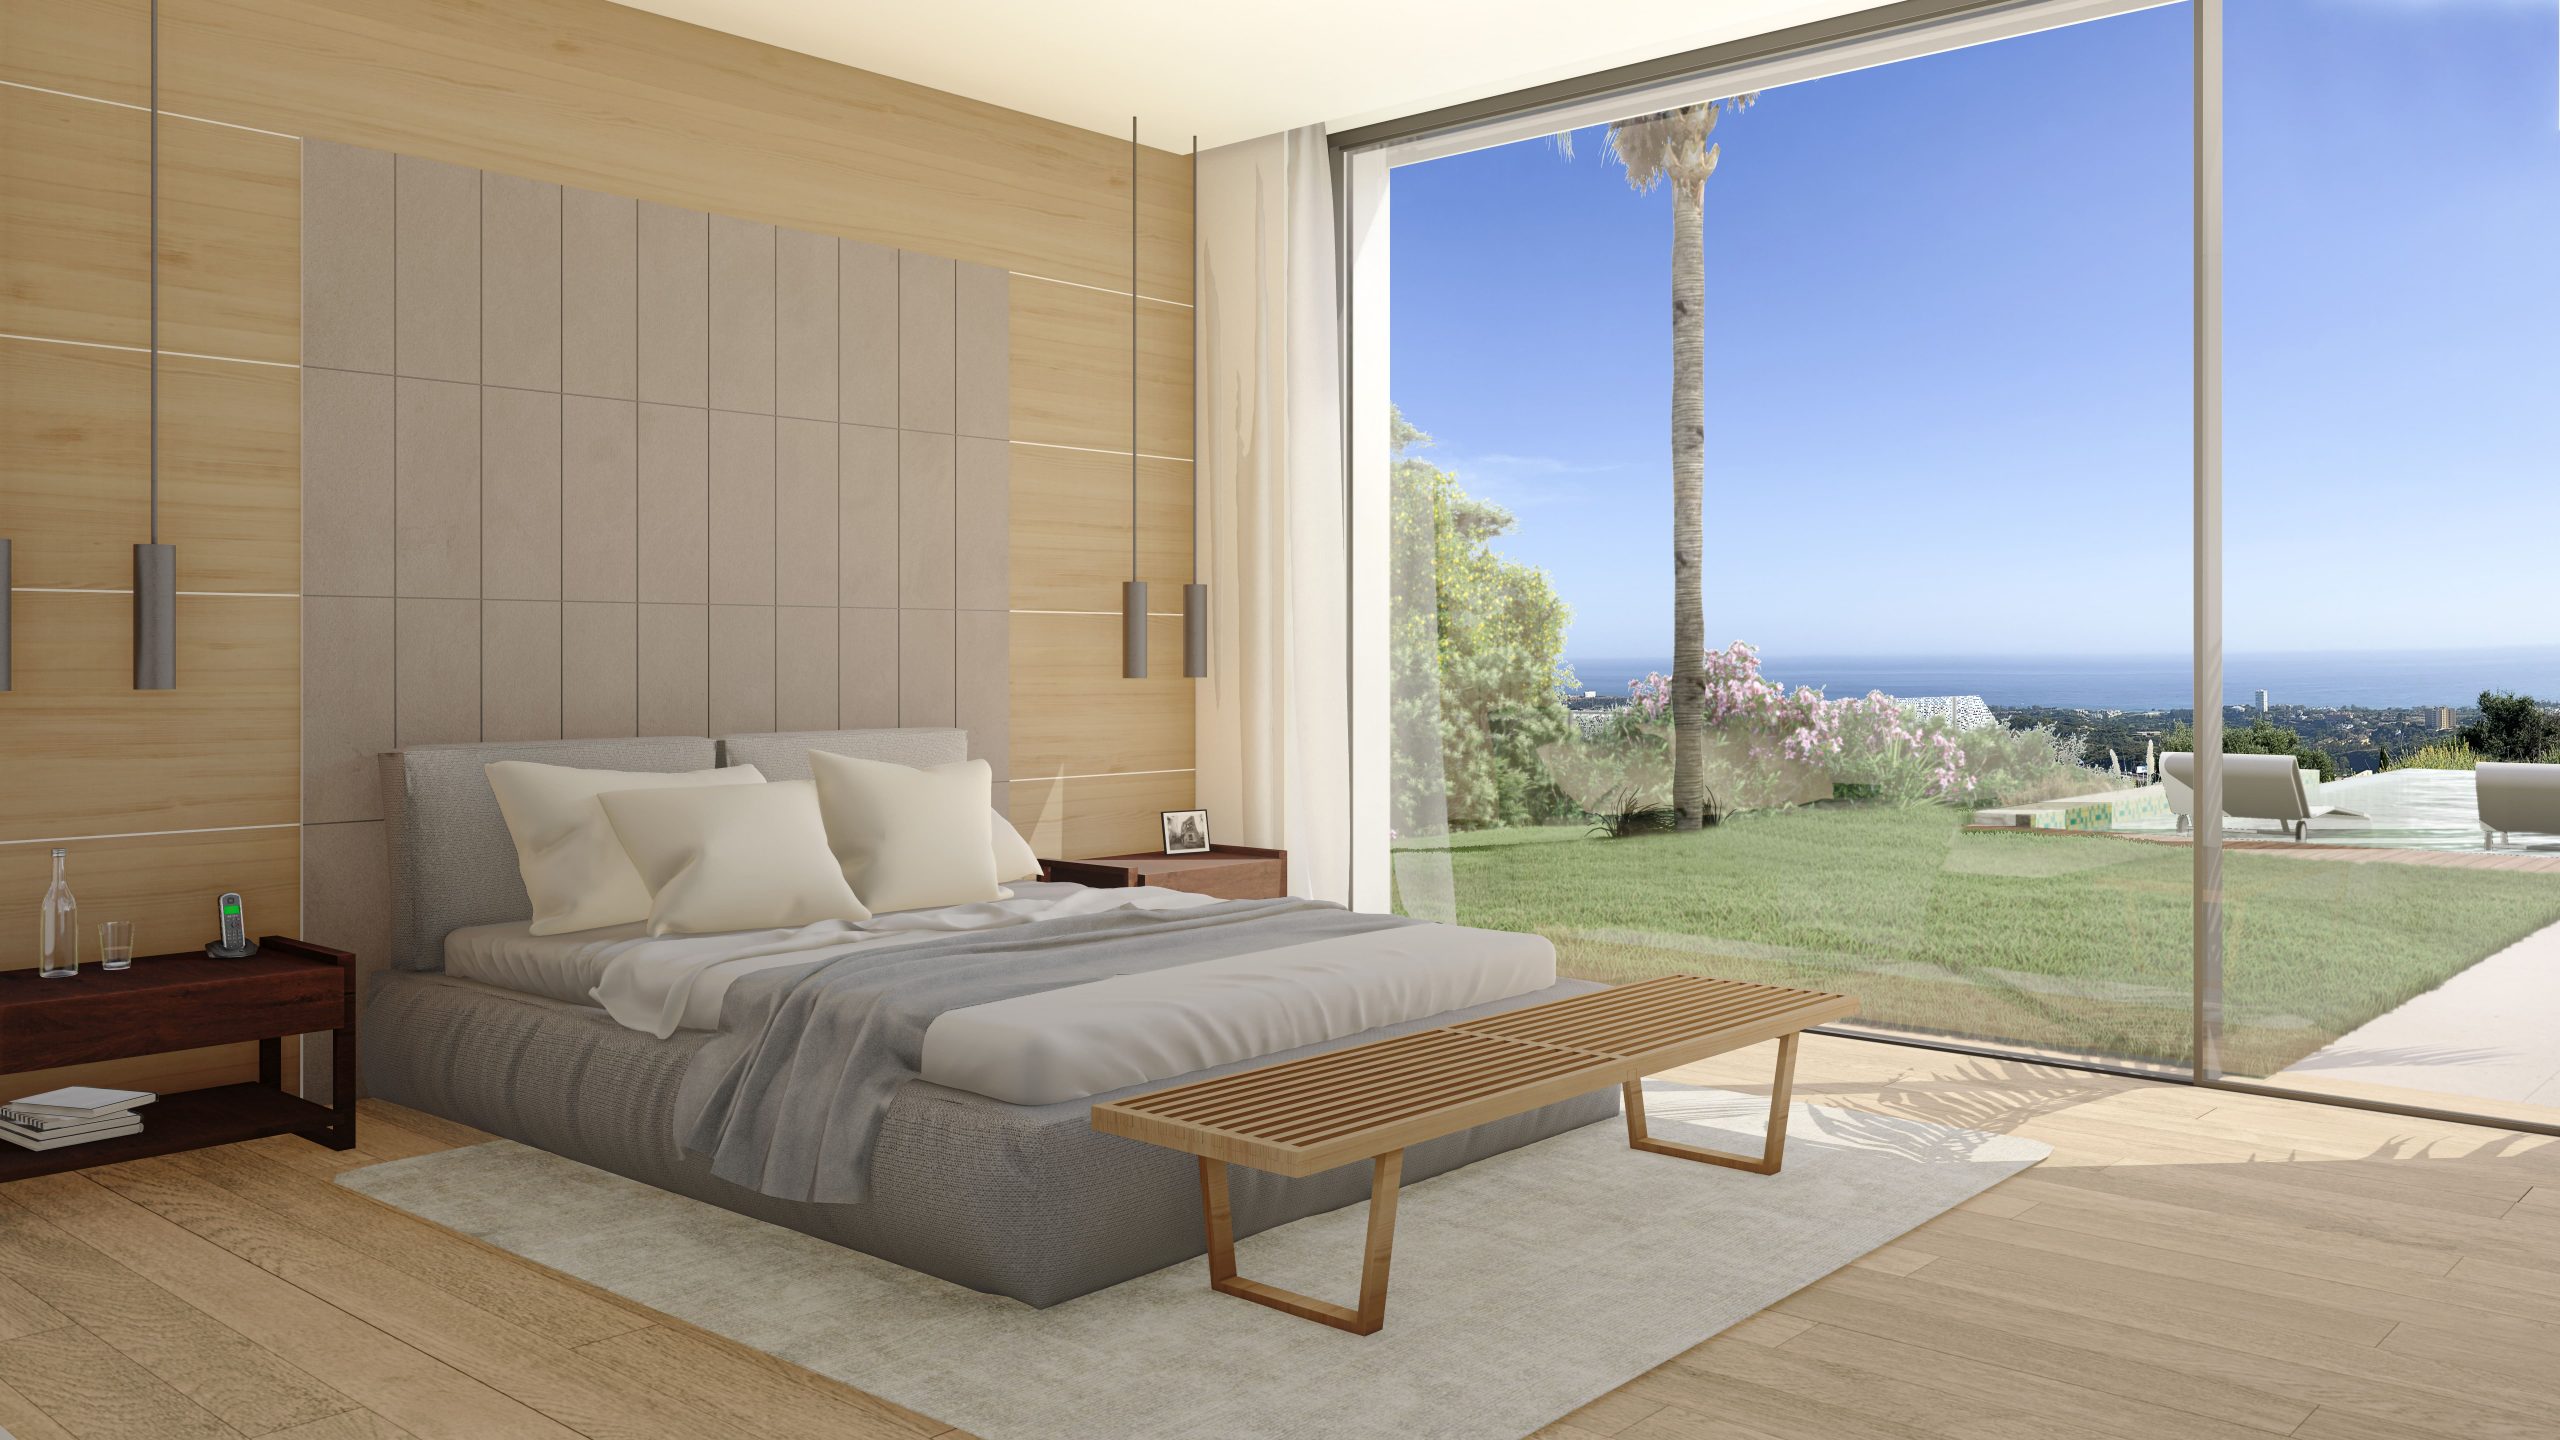 Luxury 4 bedroom villa in Marbella